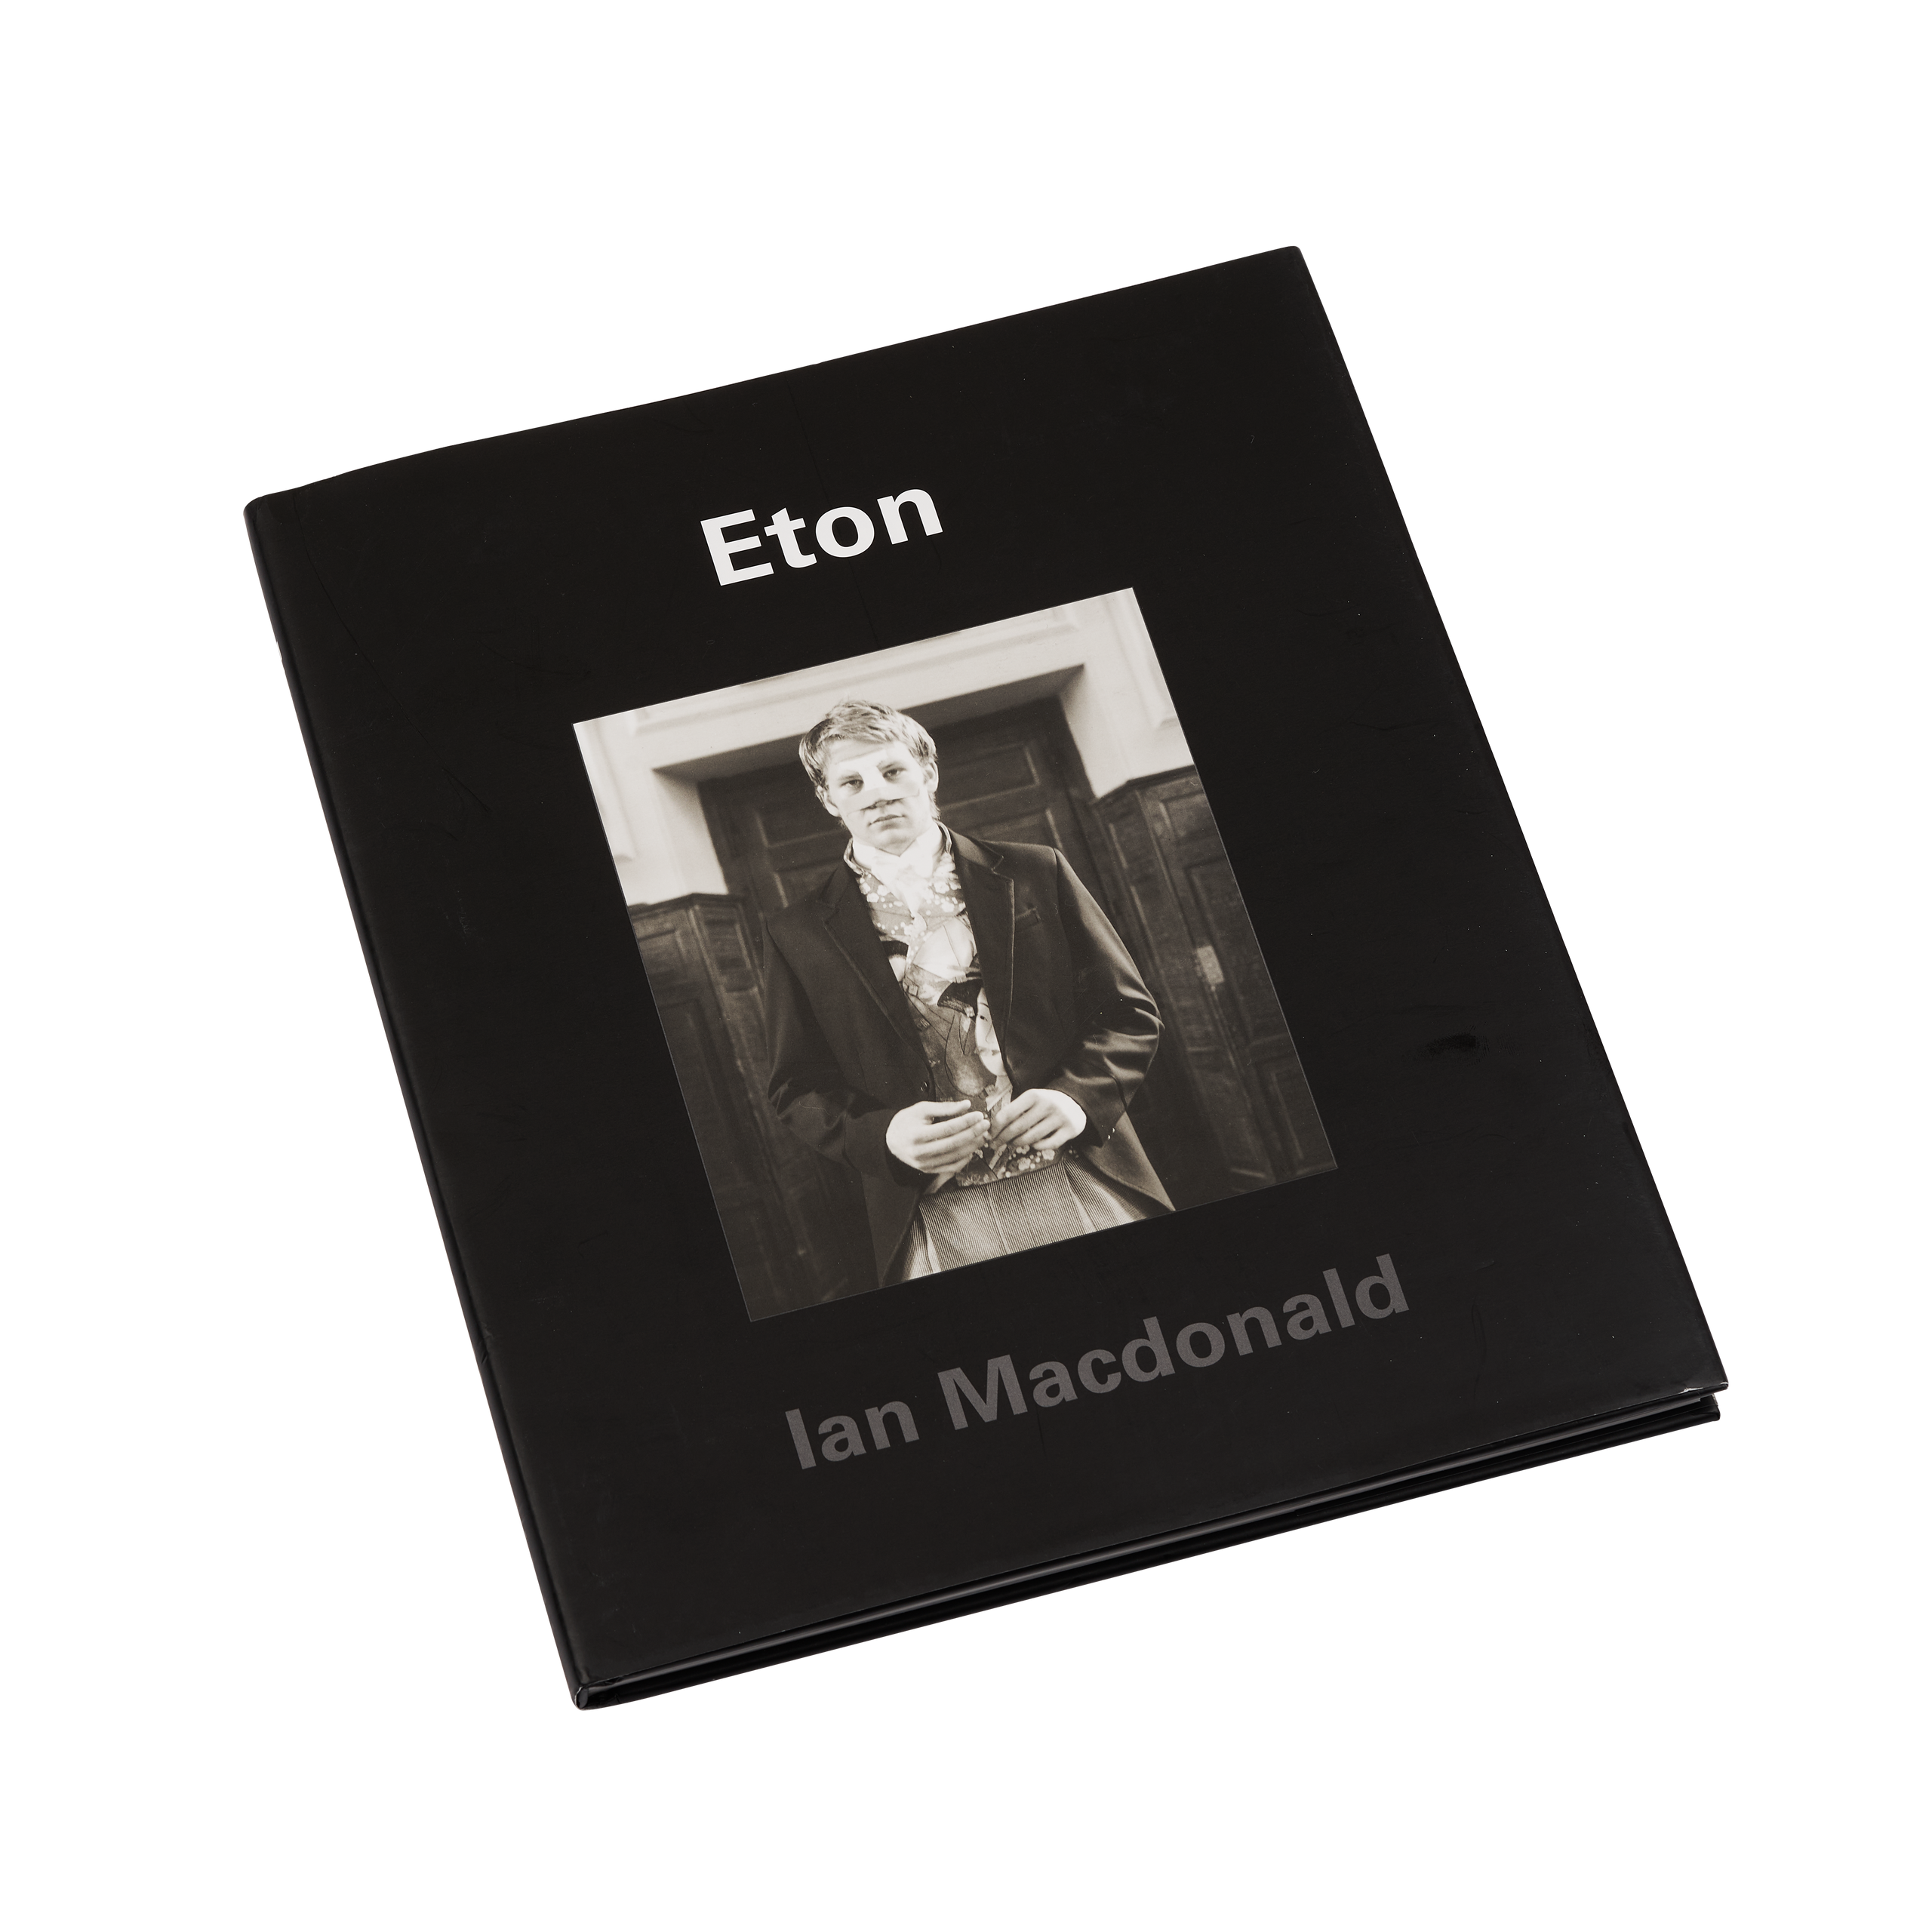 Eton by Ian MacDonald